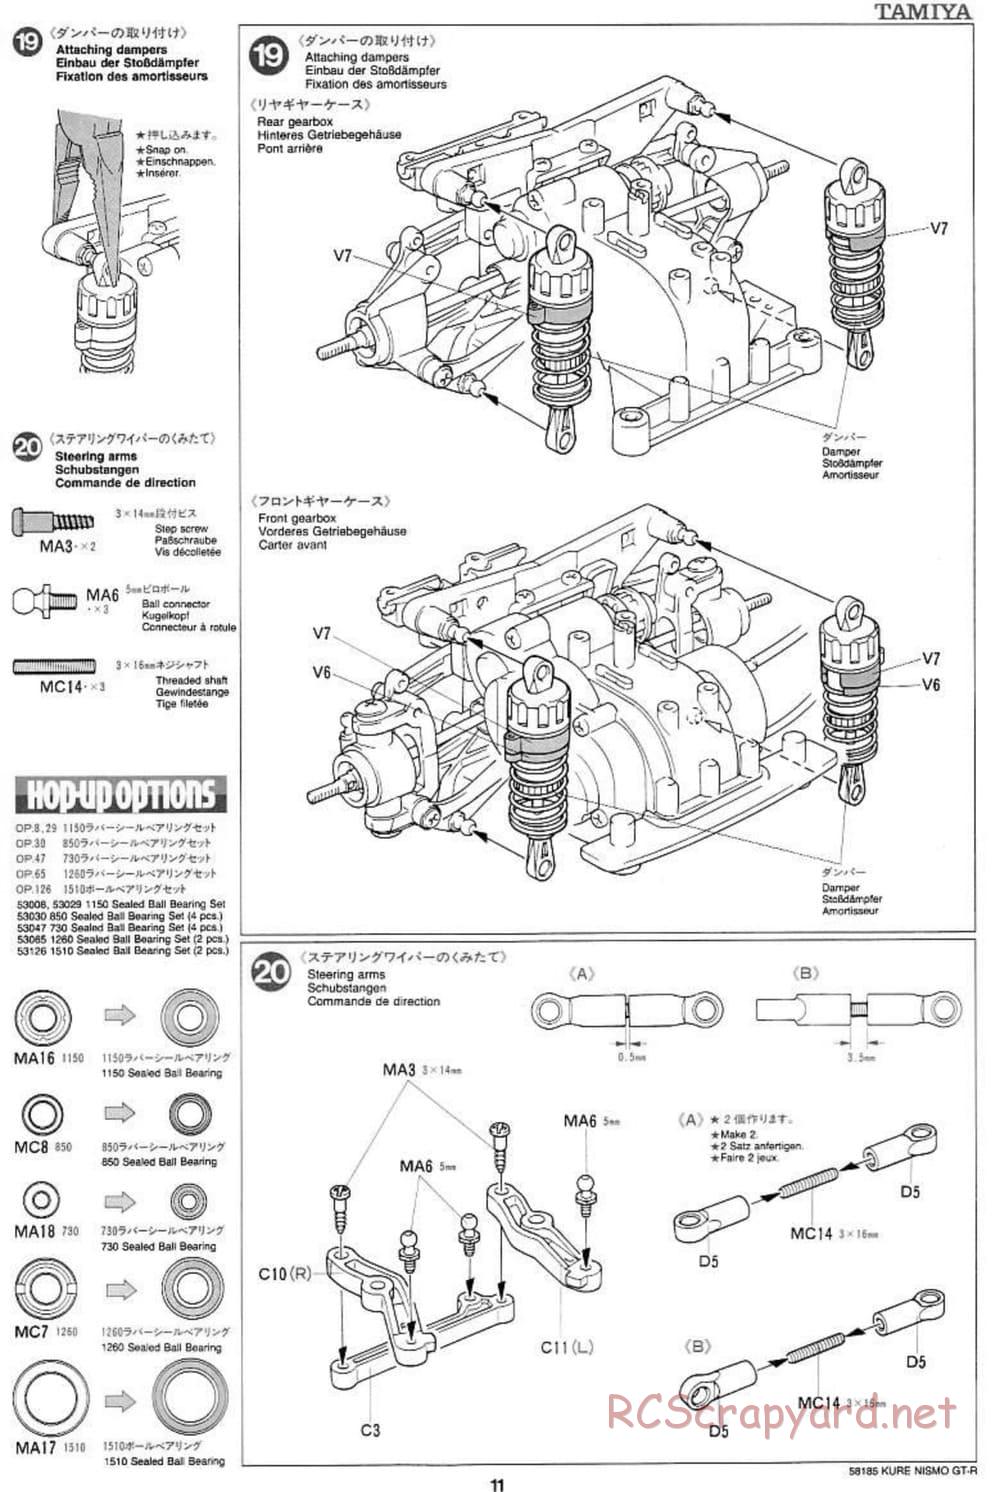 Tamiya - Kure Nismo GT-R - TA-03F Chassis - Manual - Page 11